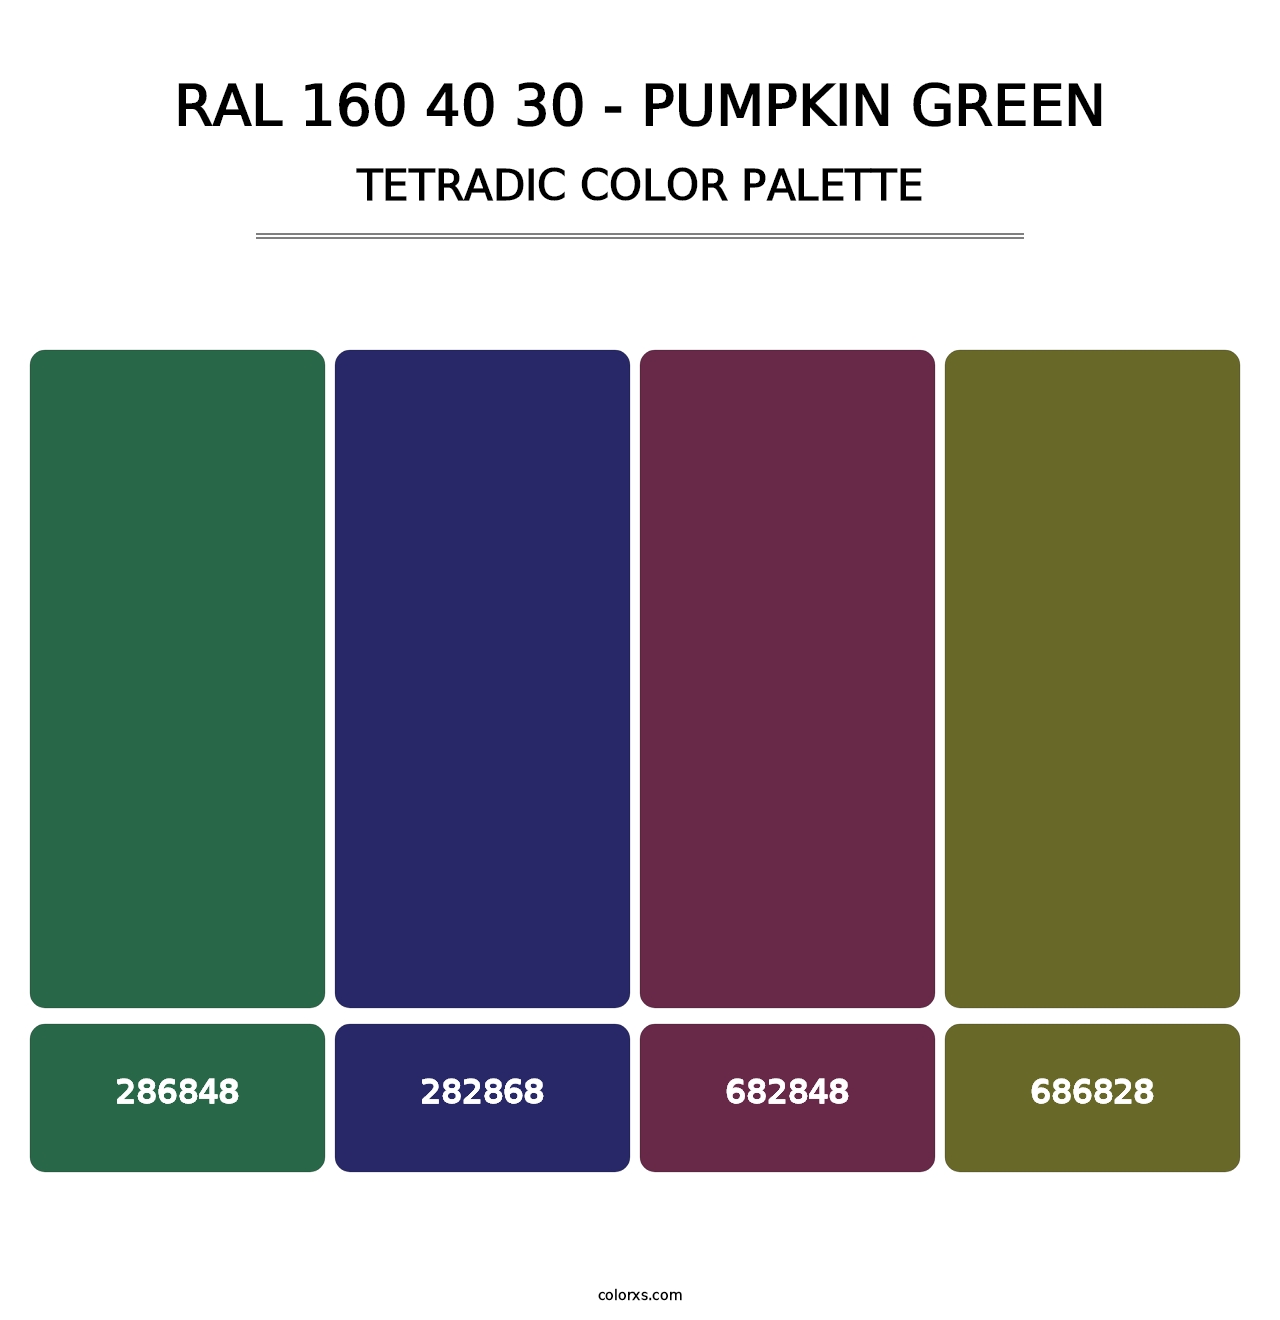 RAL 160 40 30 - Pumpkin Green - Tetradic Color Palette